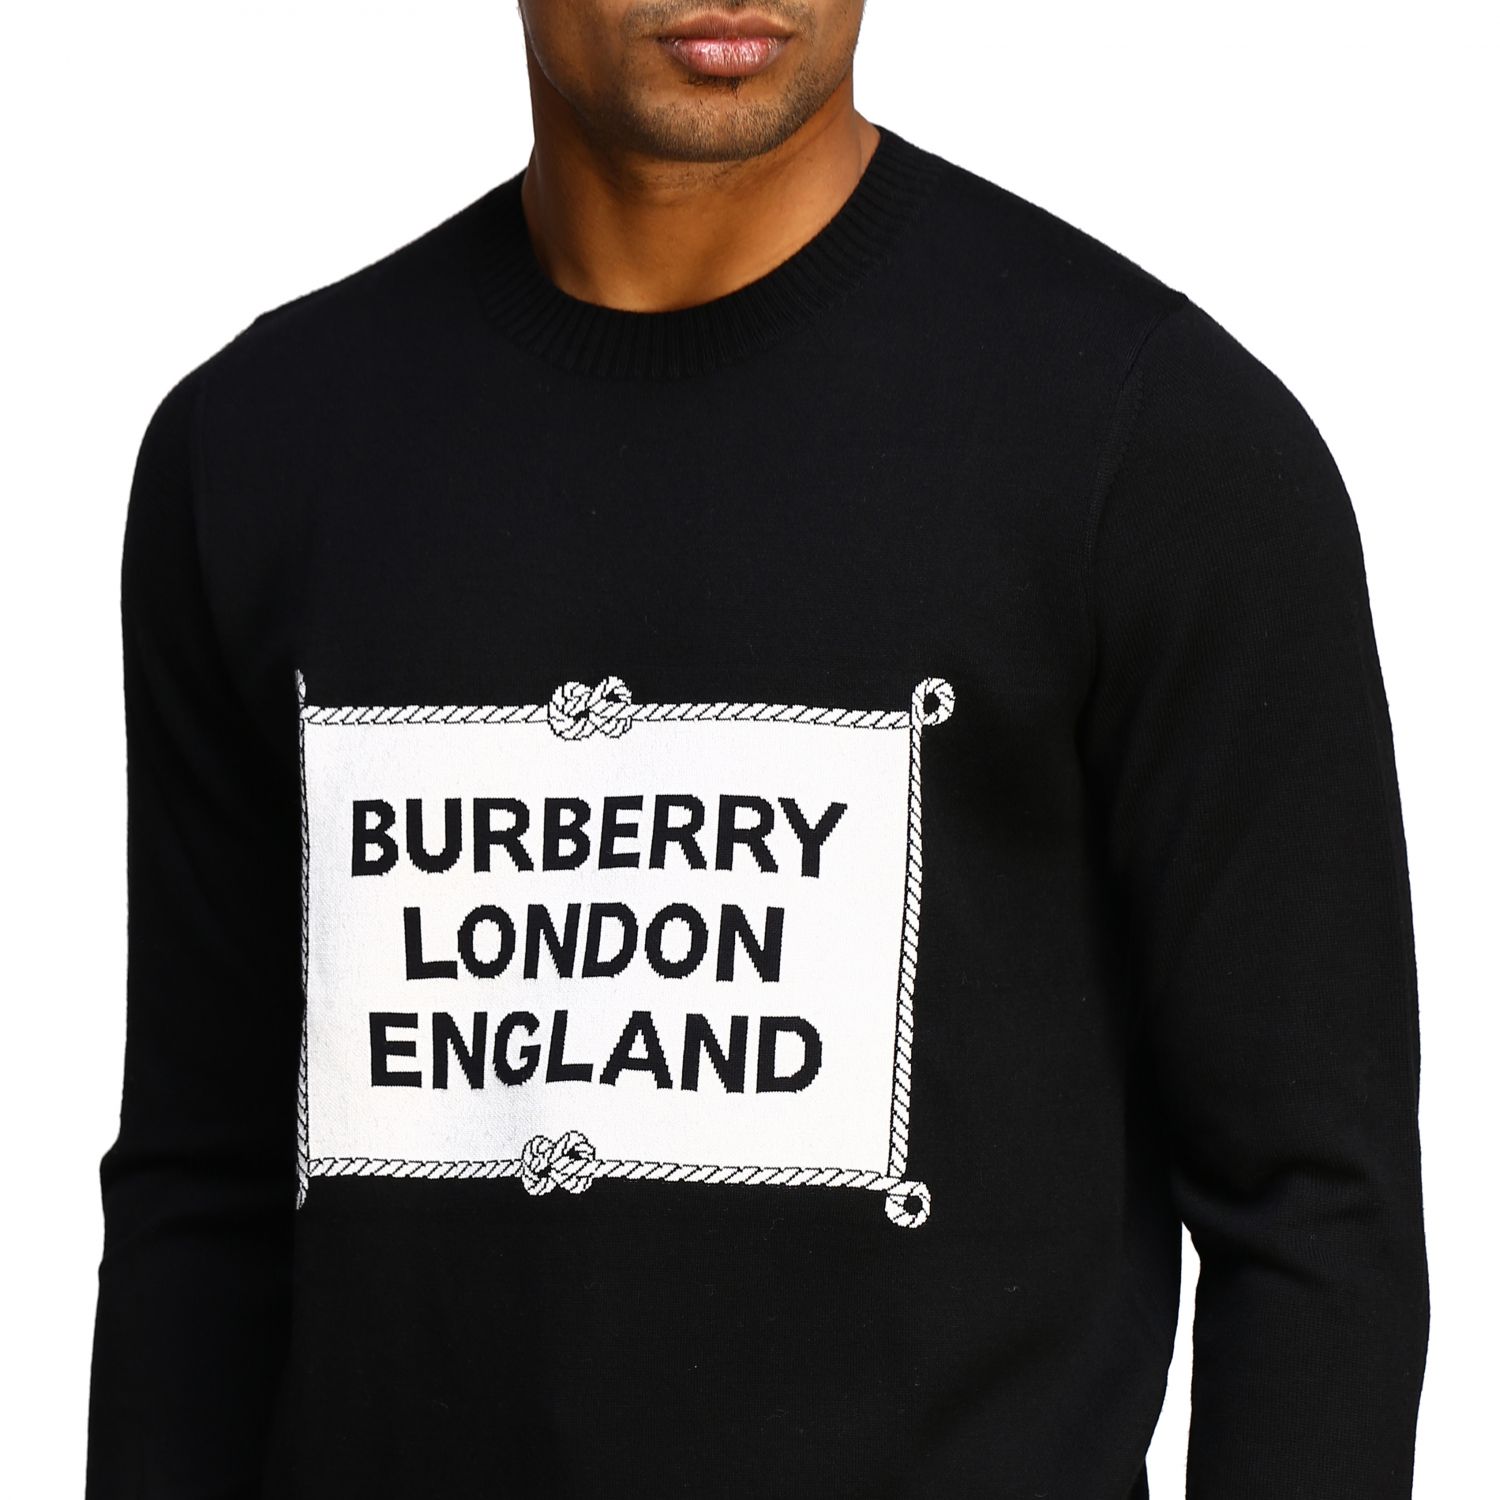 Burberry crew neck sweater with logo 